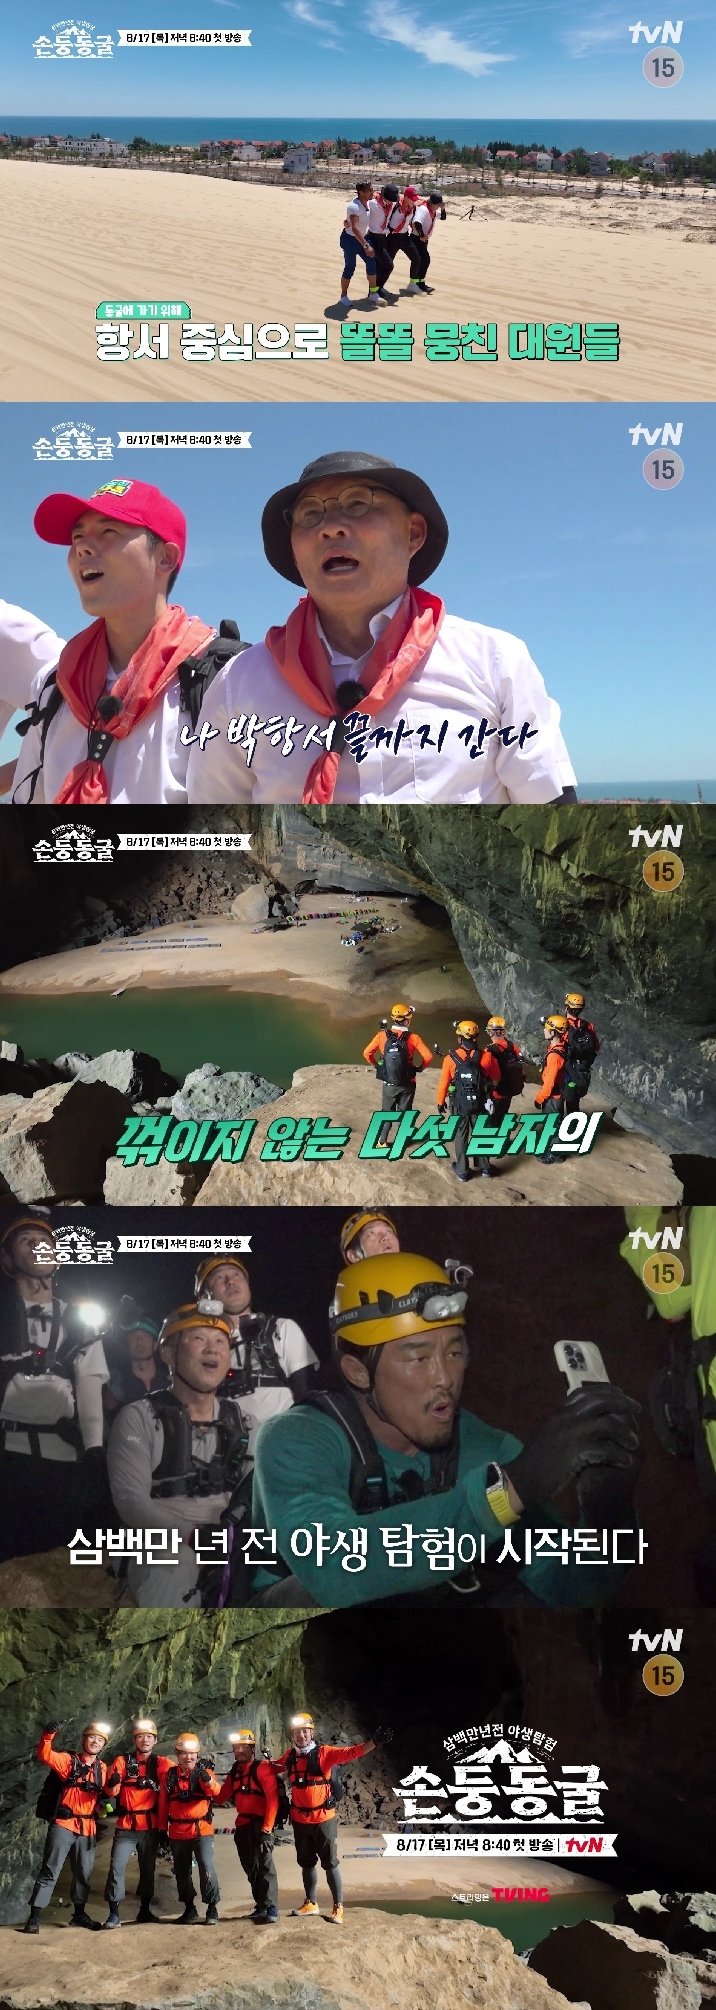 tvN 삼백만년 전 야생탐험 제공백